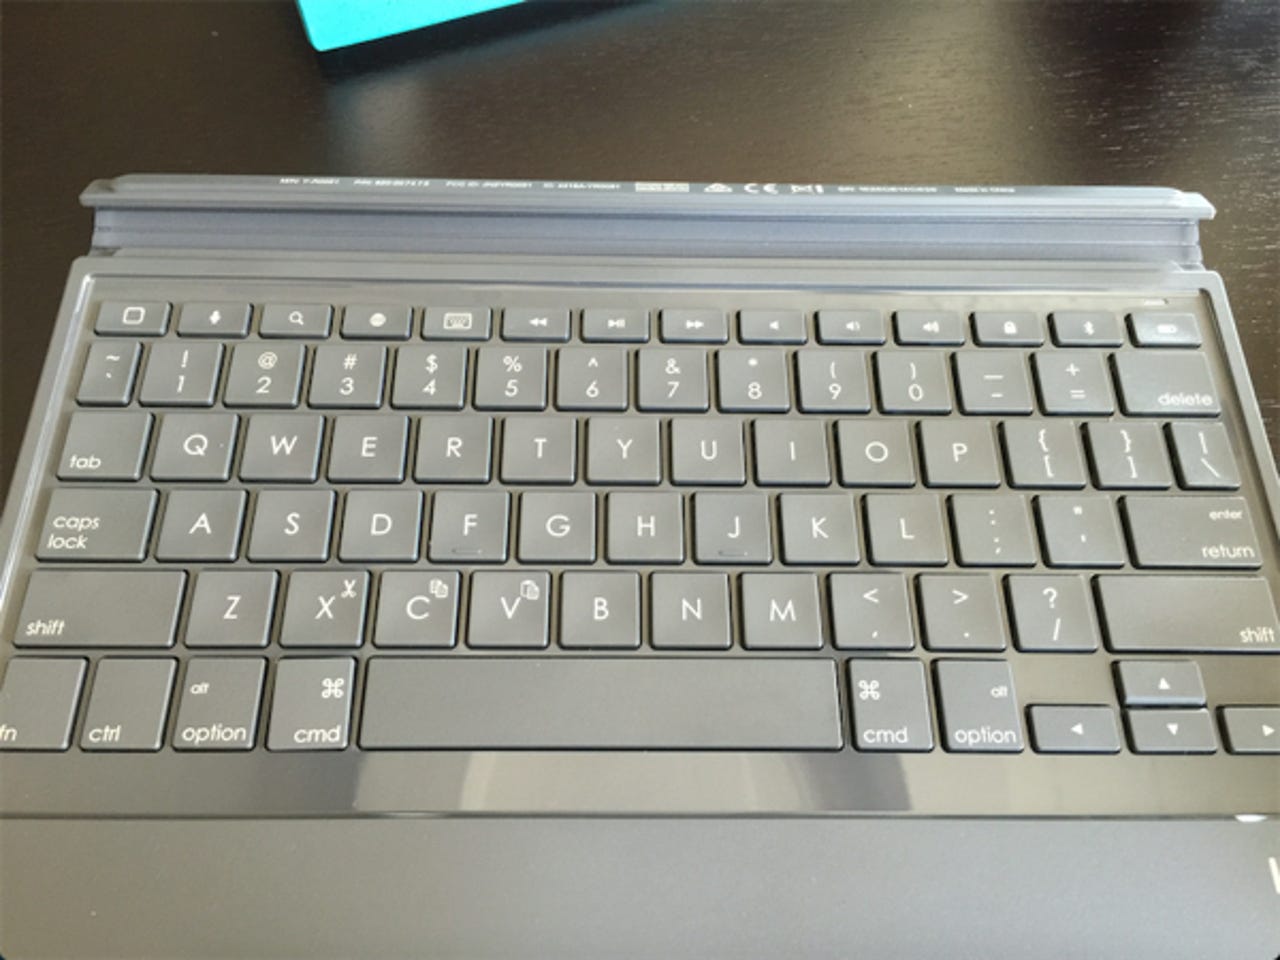 10-logi-blok-protective-keyboard-case-keyboard-closeup.jpg